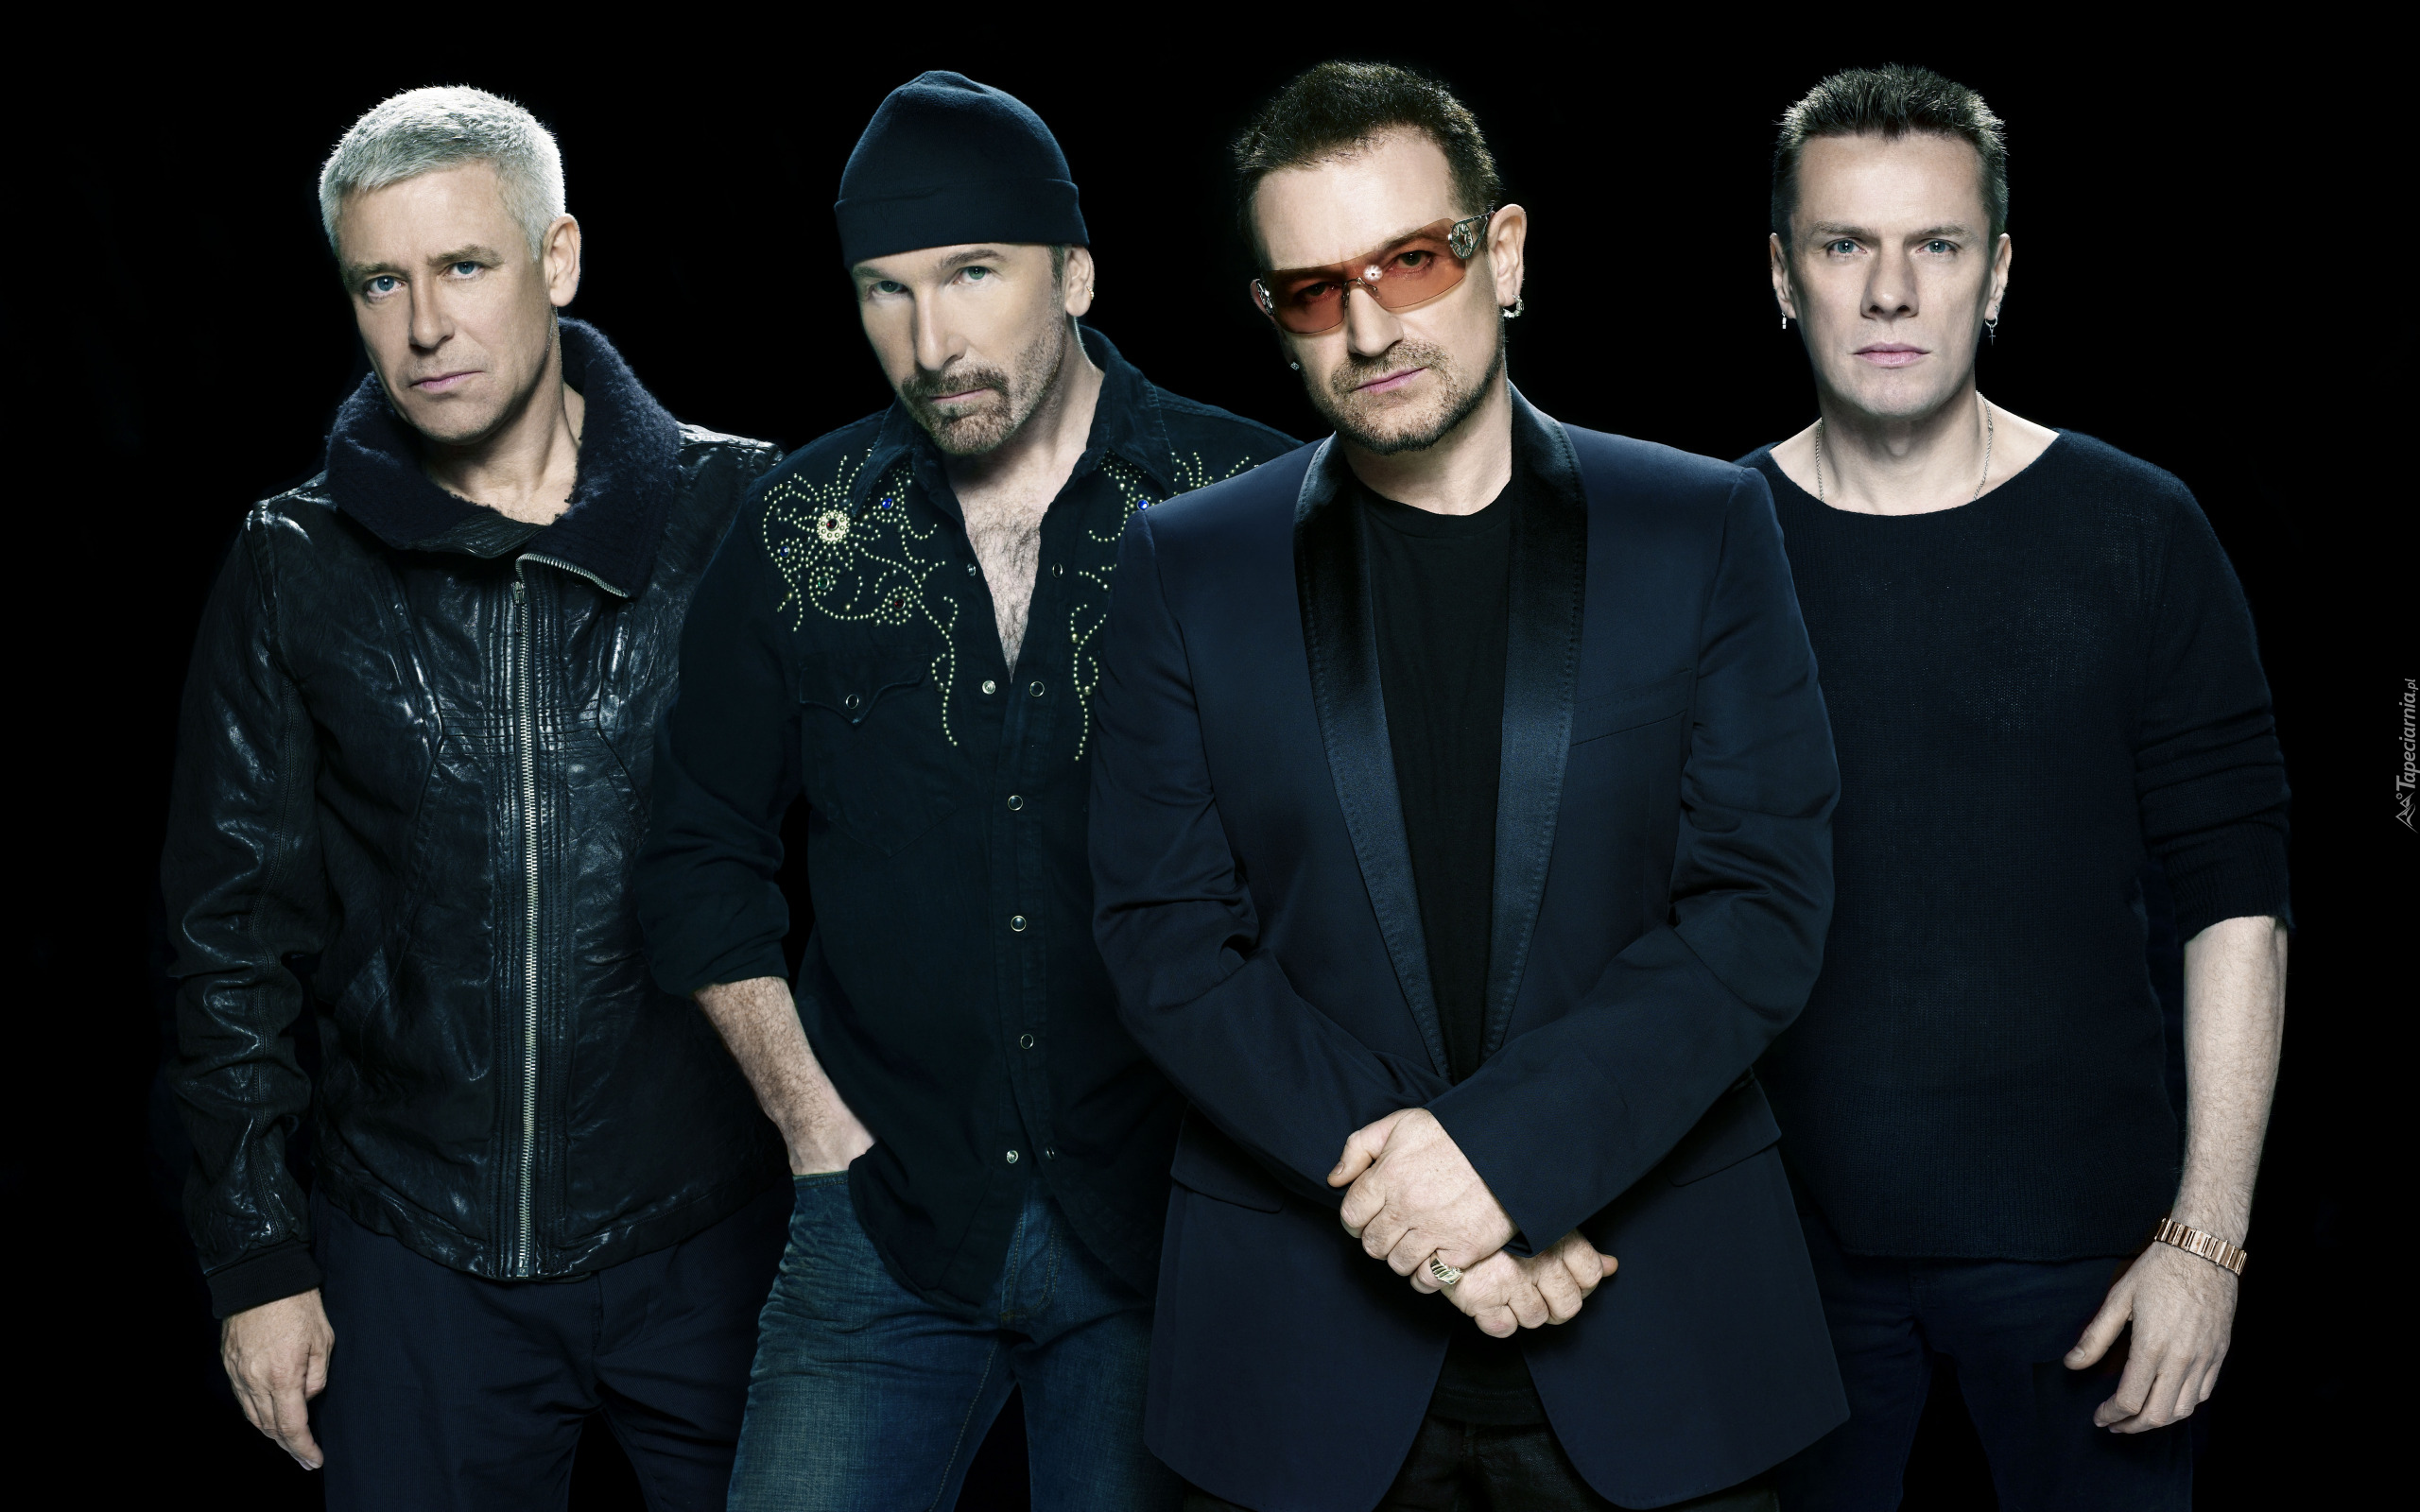 U2, Zespół, Rock, Adam Clayton, The Edge, Bono, Larry Mullen